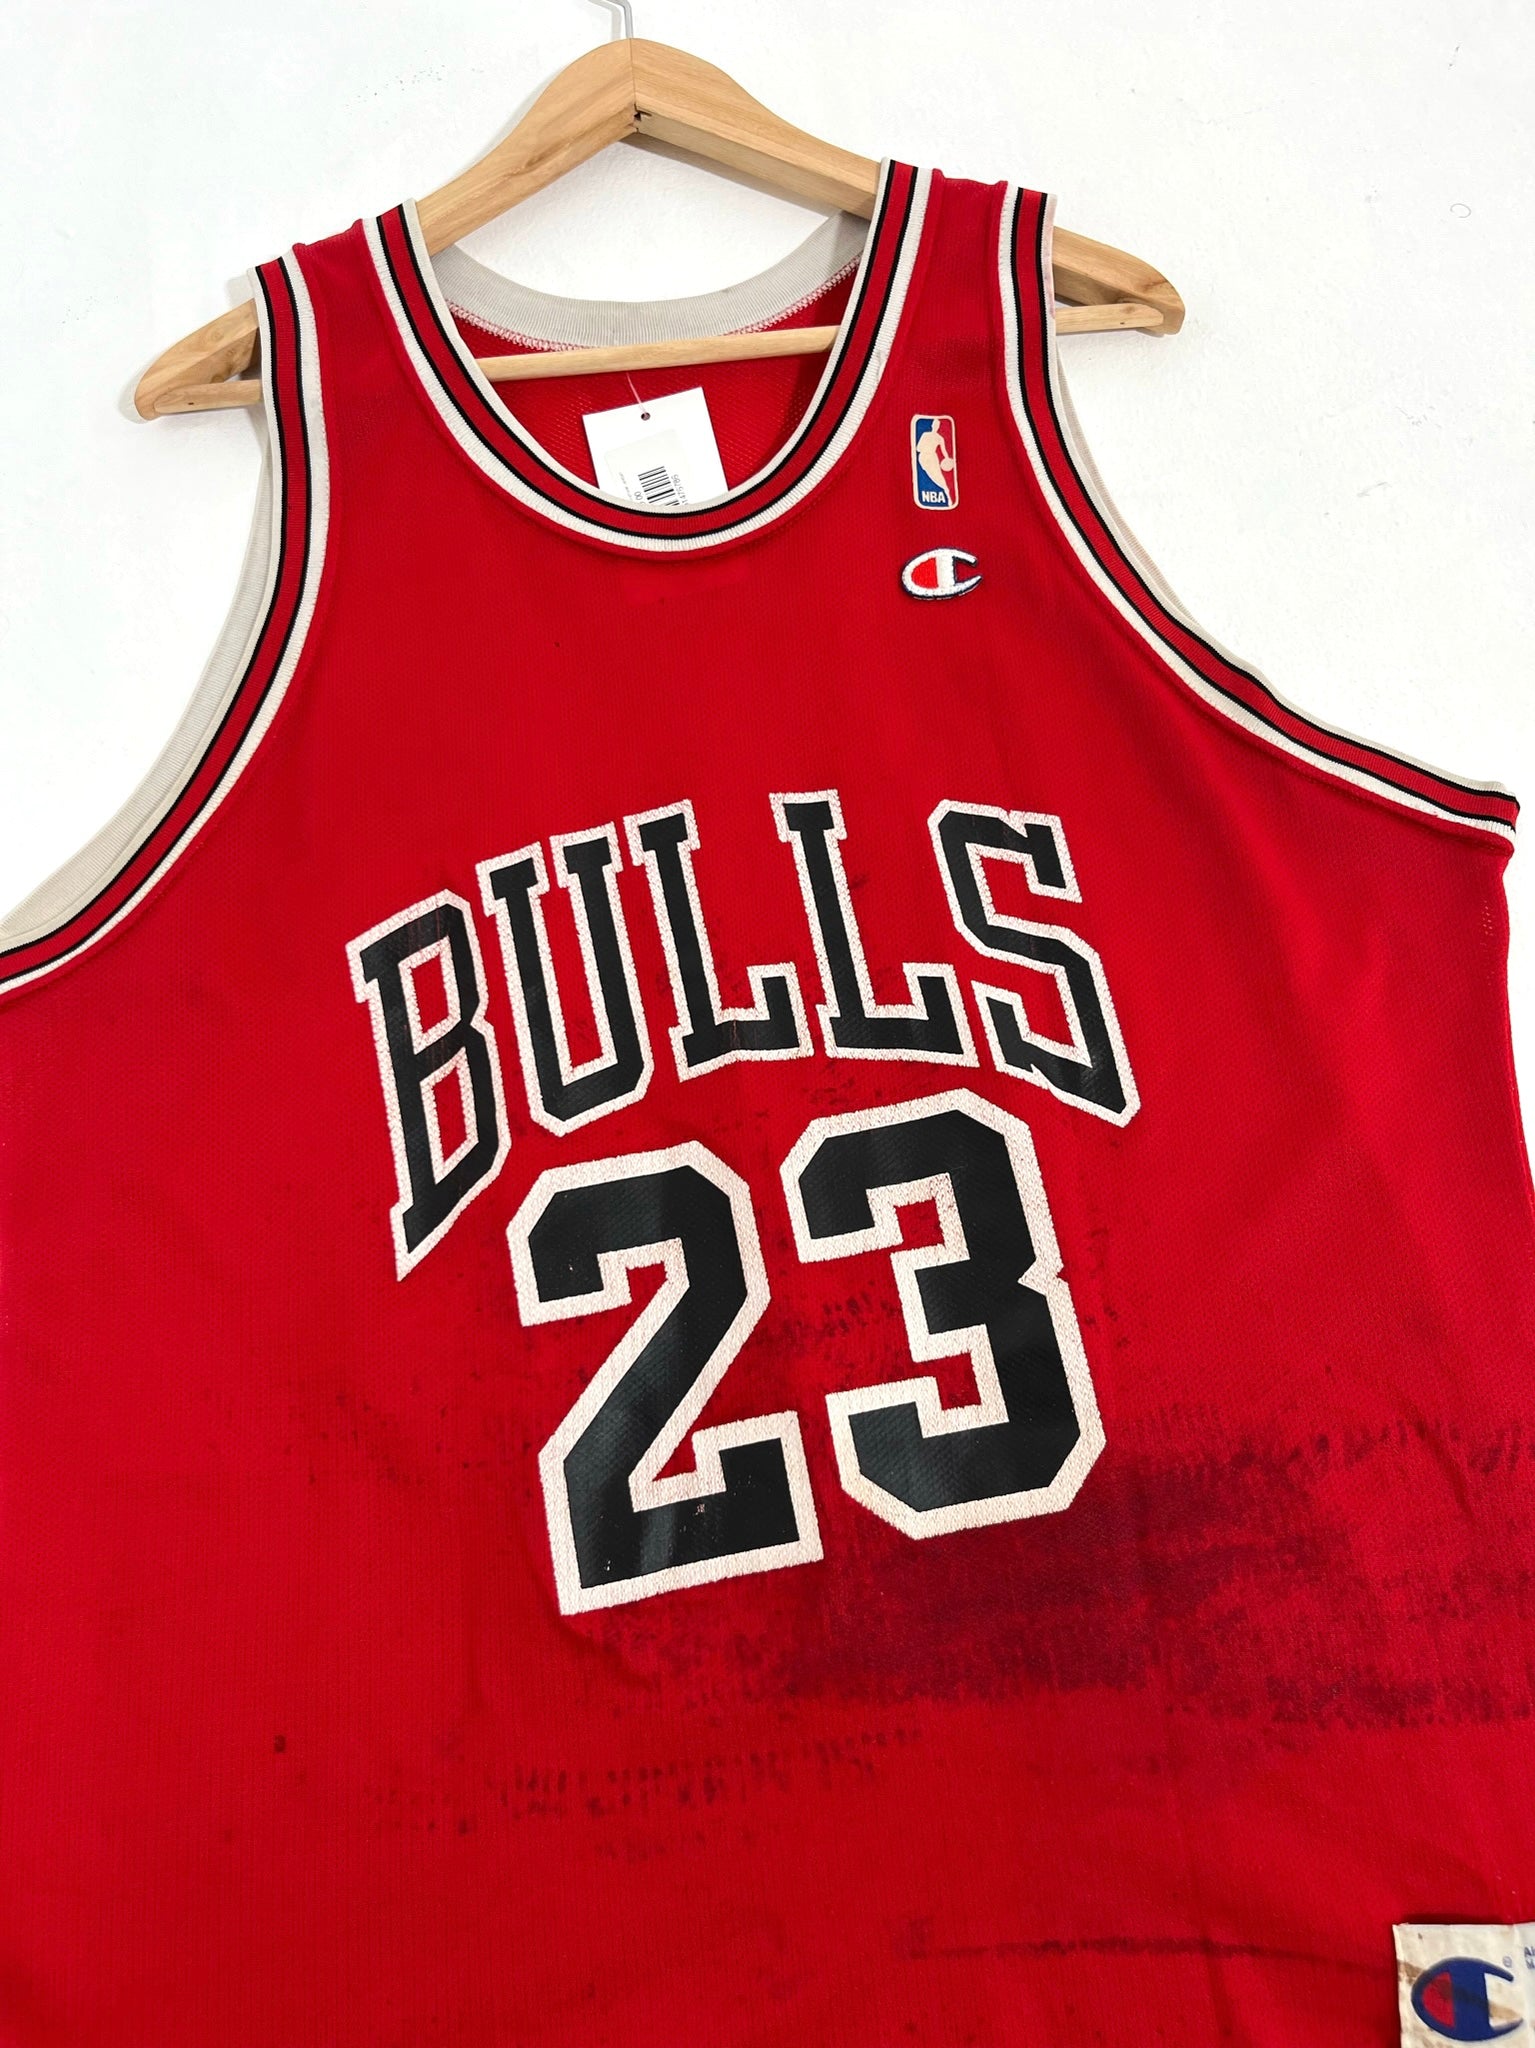 Vintage Chicago Bulls Michael Jordan Basketball Jersey